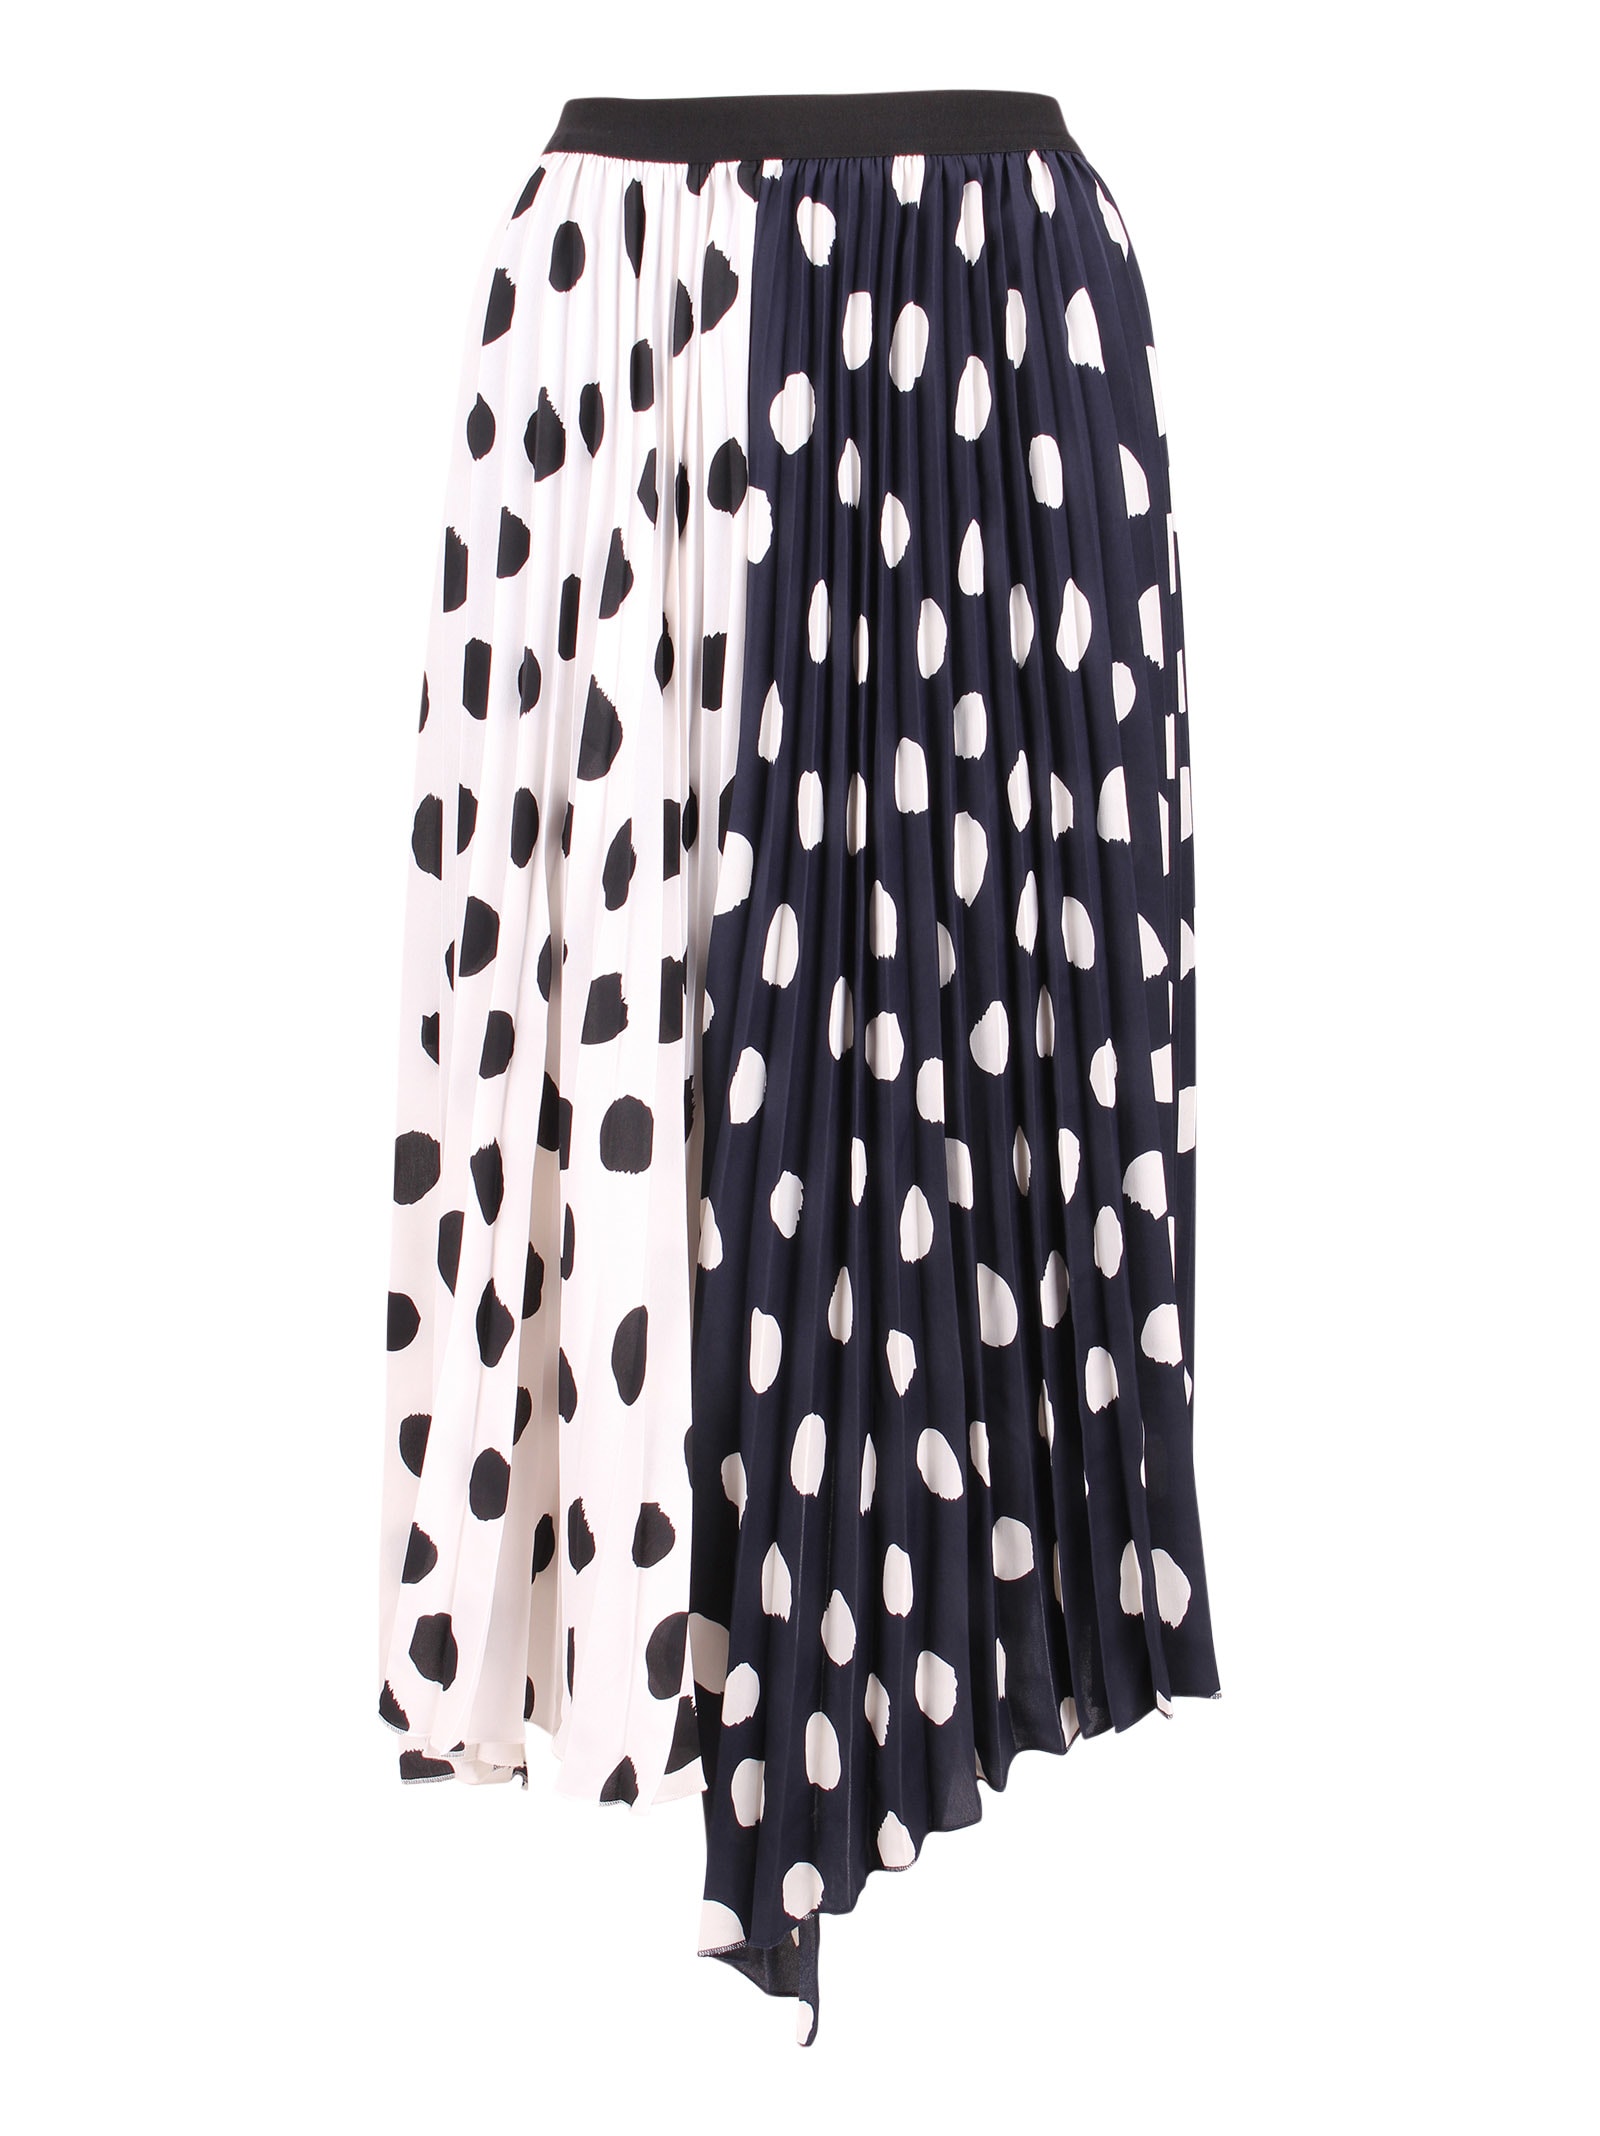 Jovonna London harmur Polyester Skirt